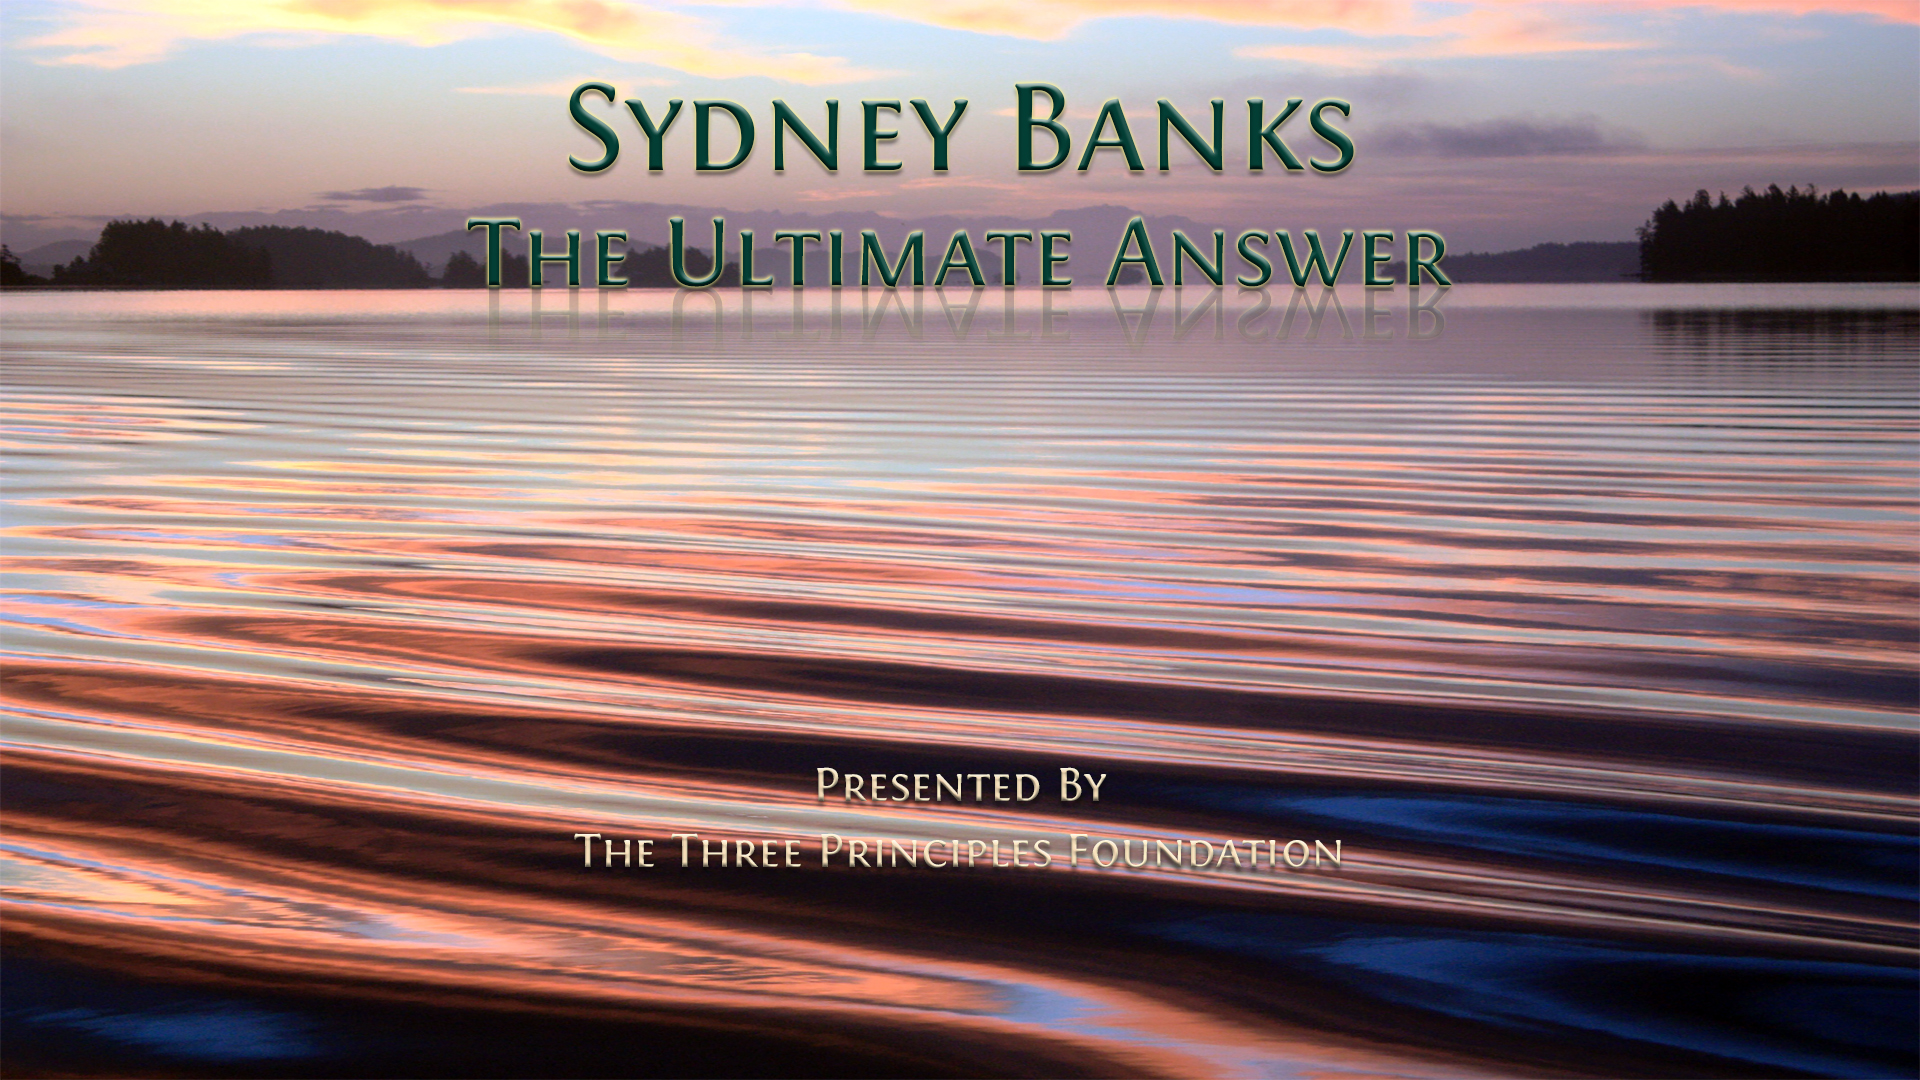 Sydney Banks Quote Sydney Banks Quotations Encouragement